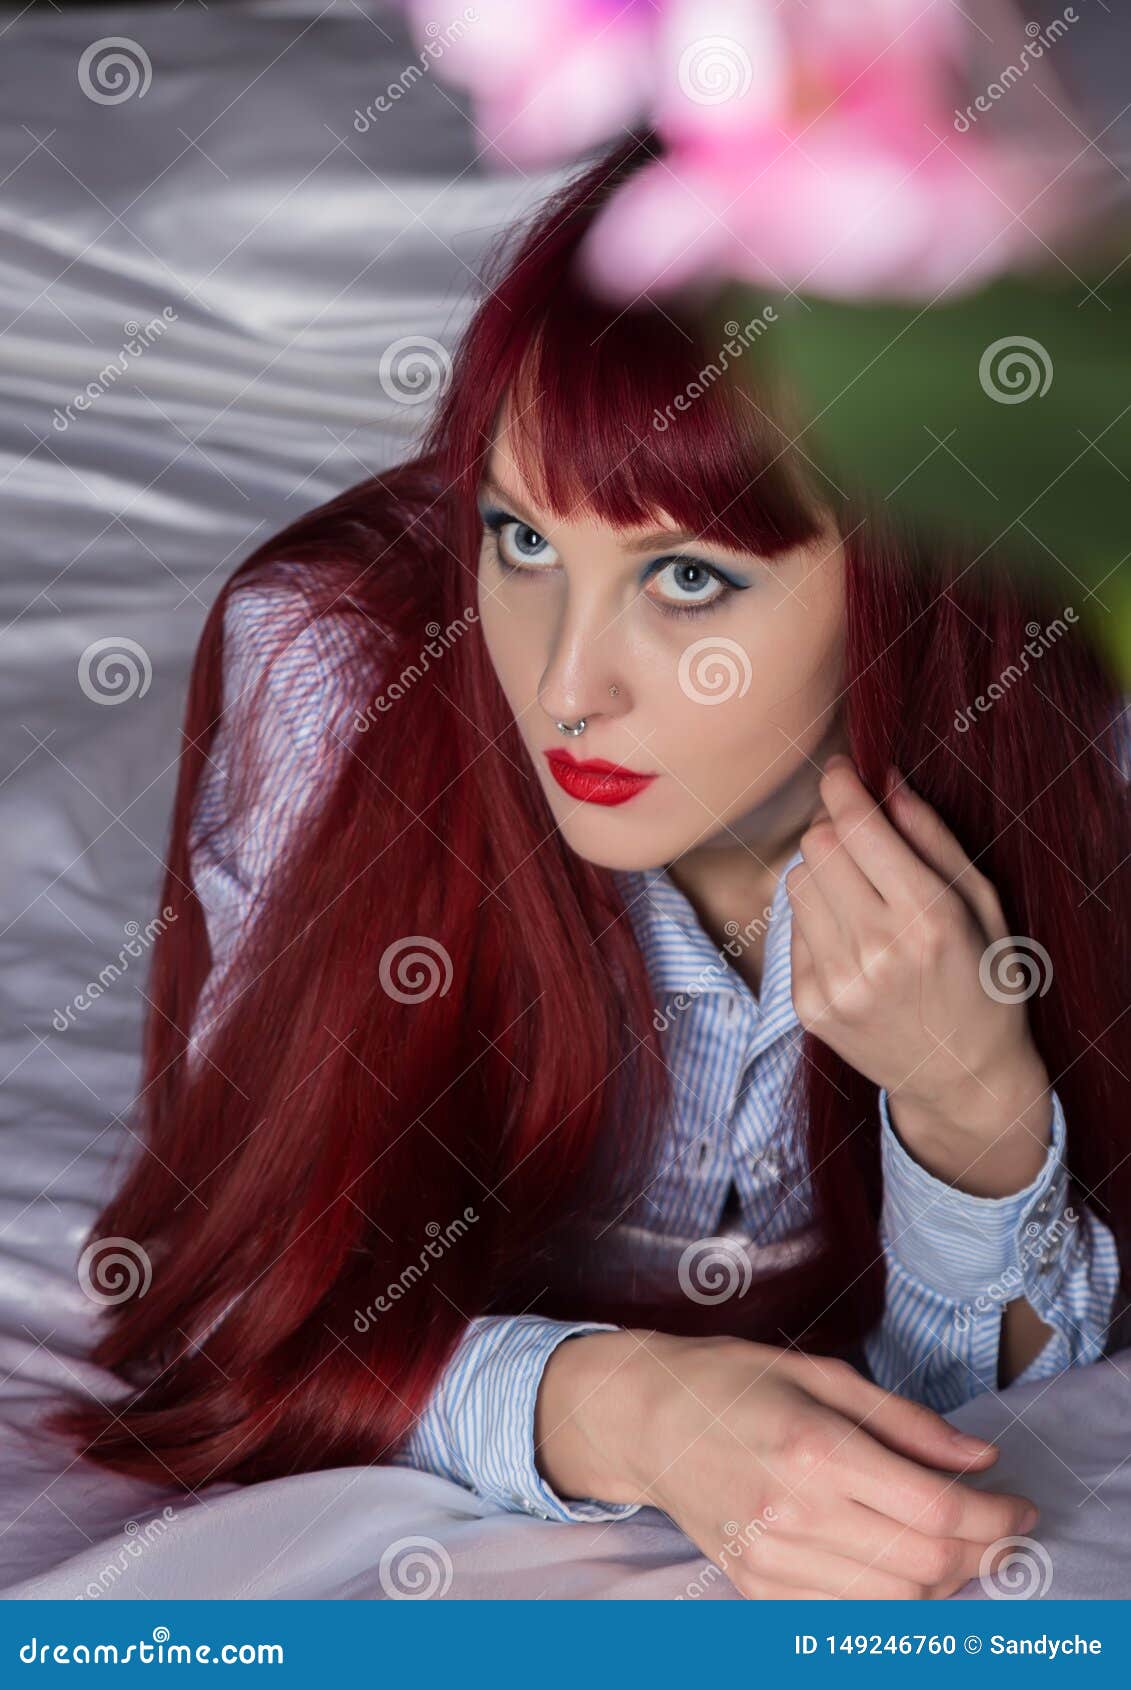 207 Sexy Redhead Underwear Girl Stock Photos